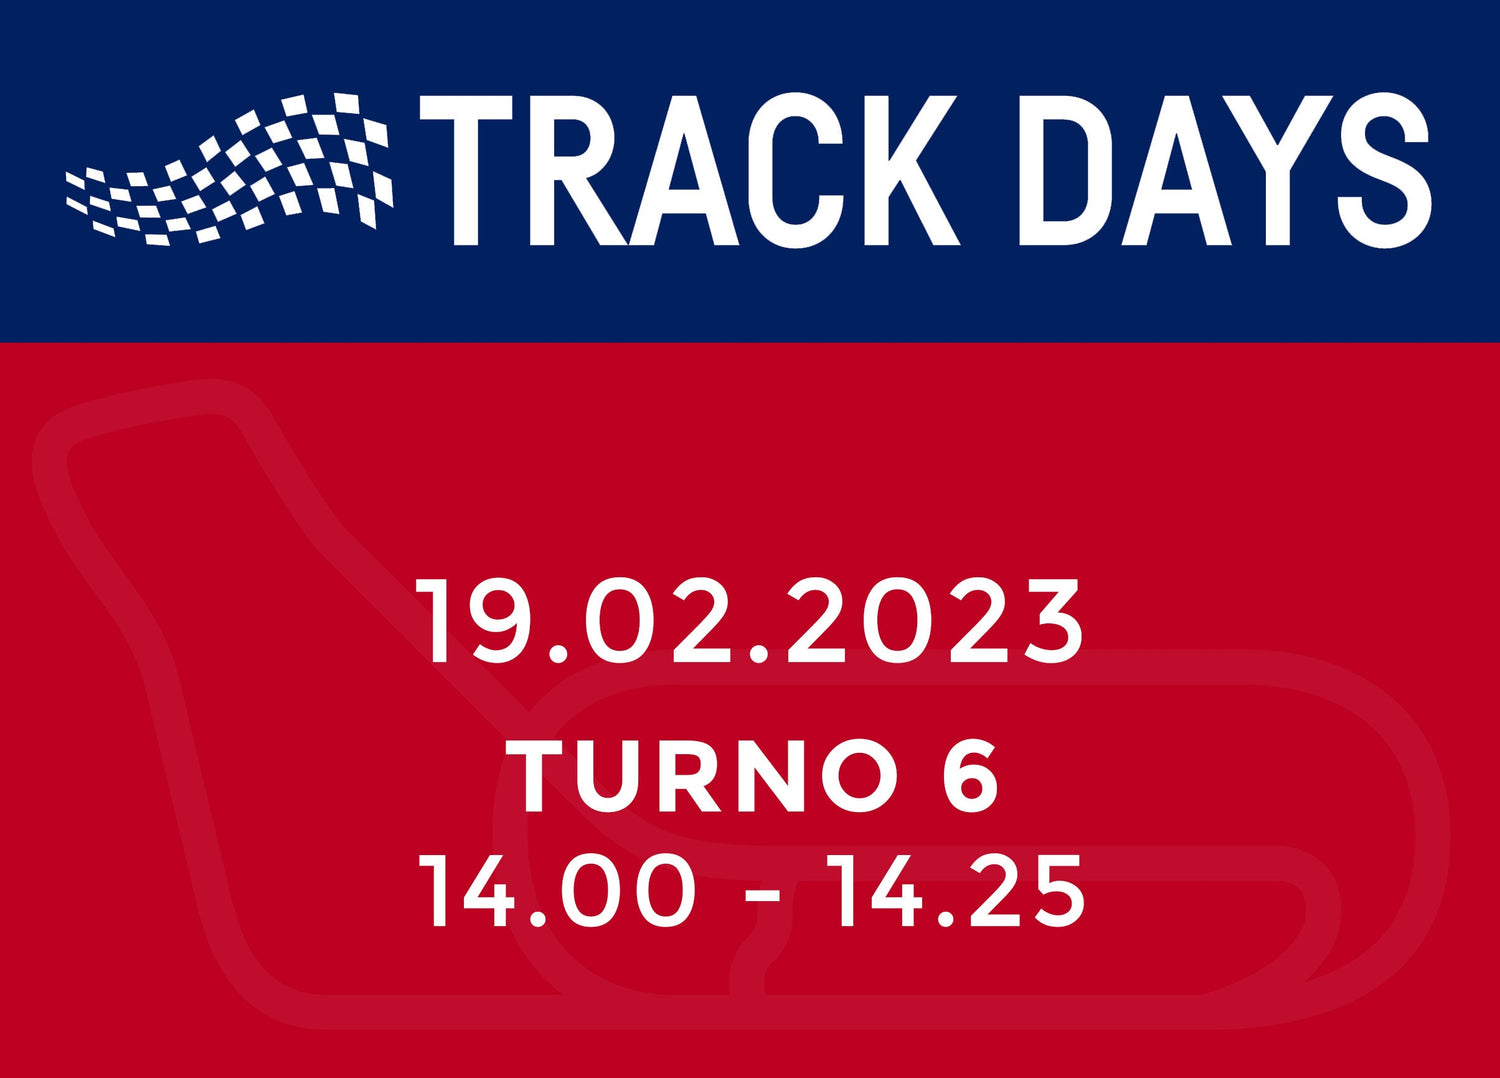 TRACK DAYS 19.02.23 TURNO 6